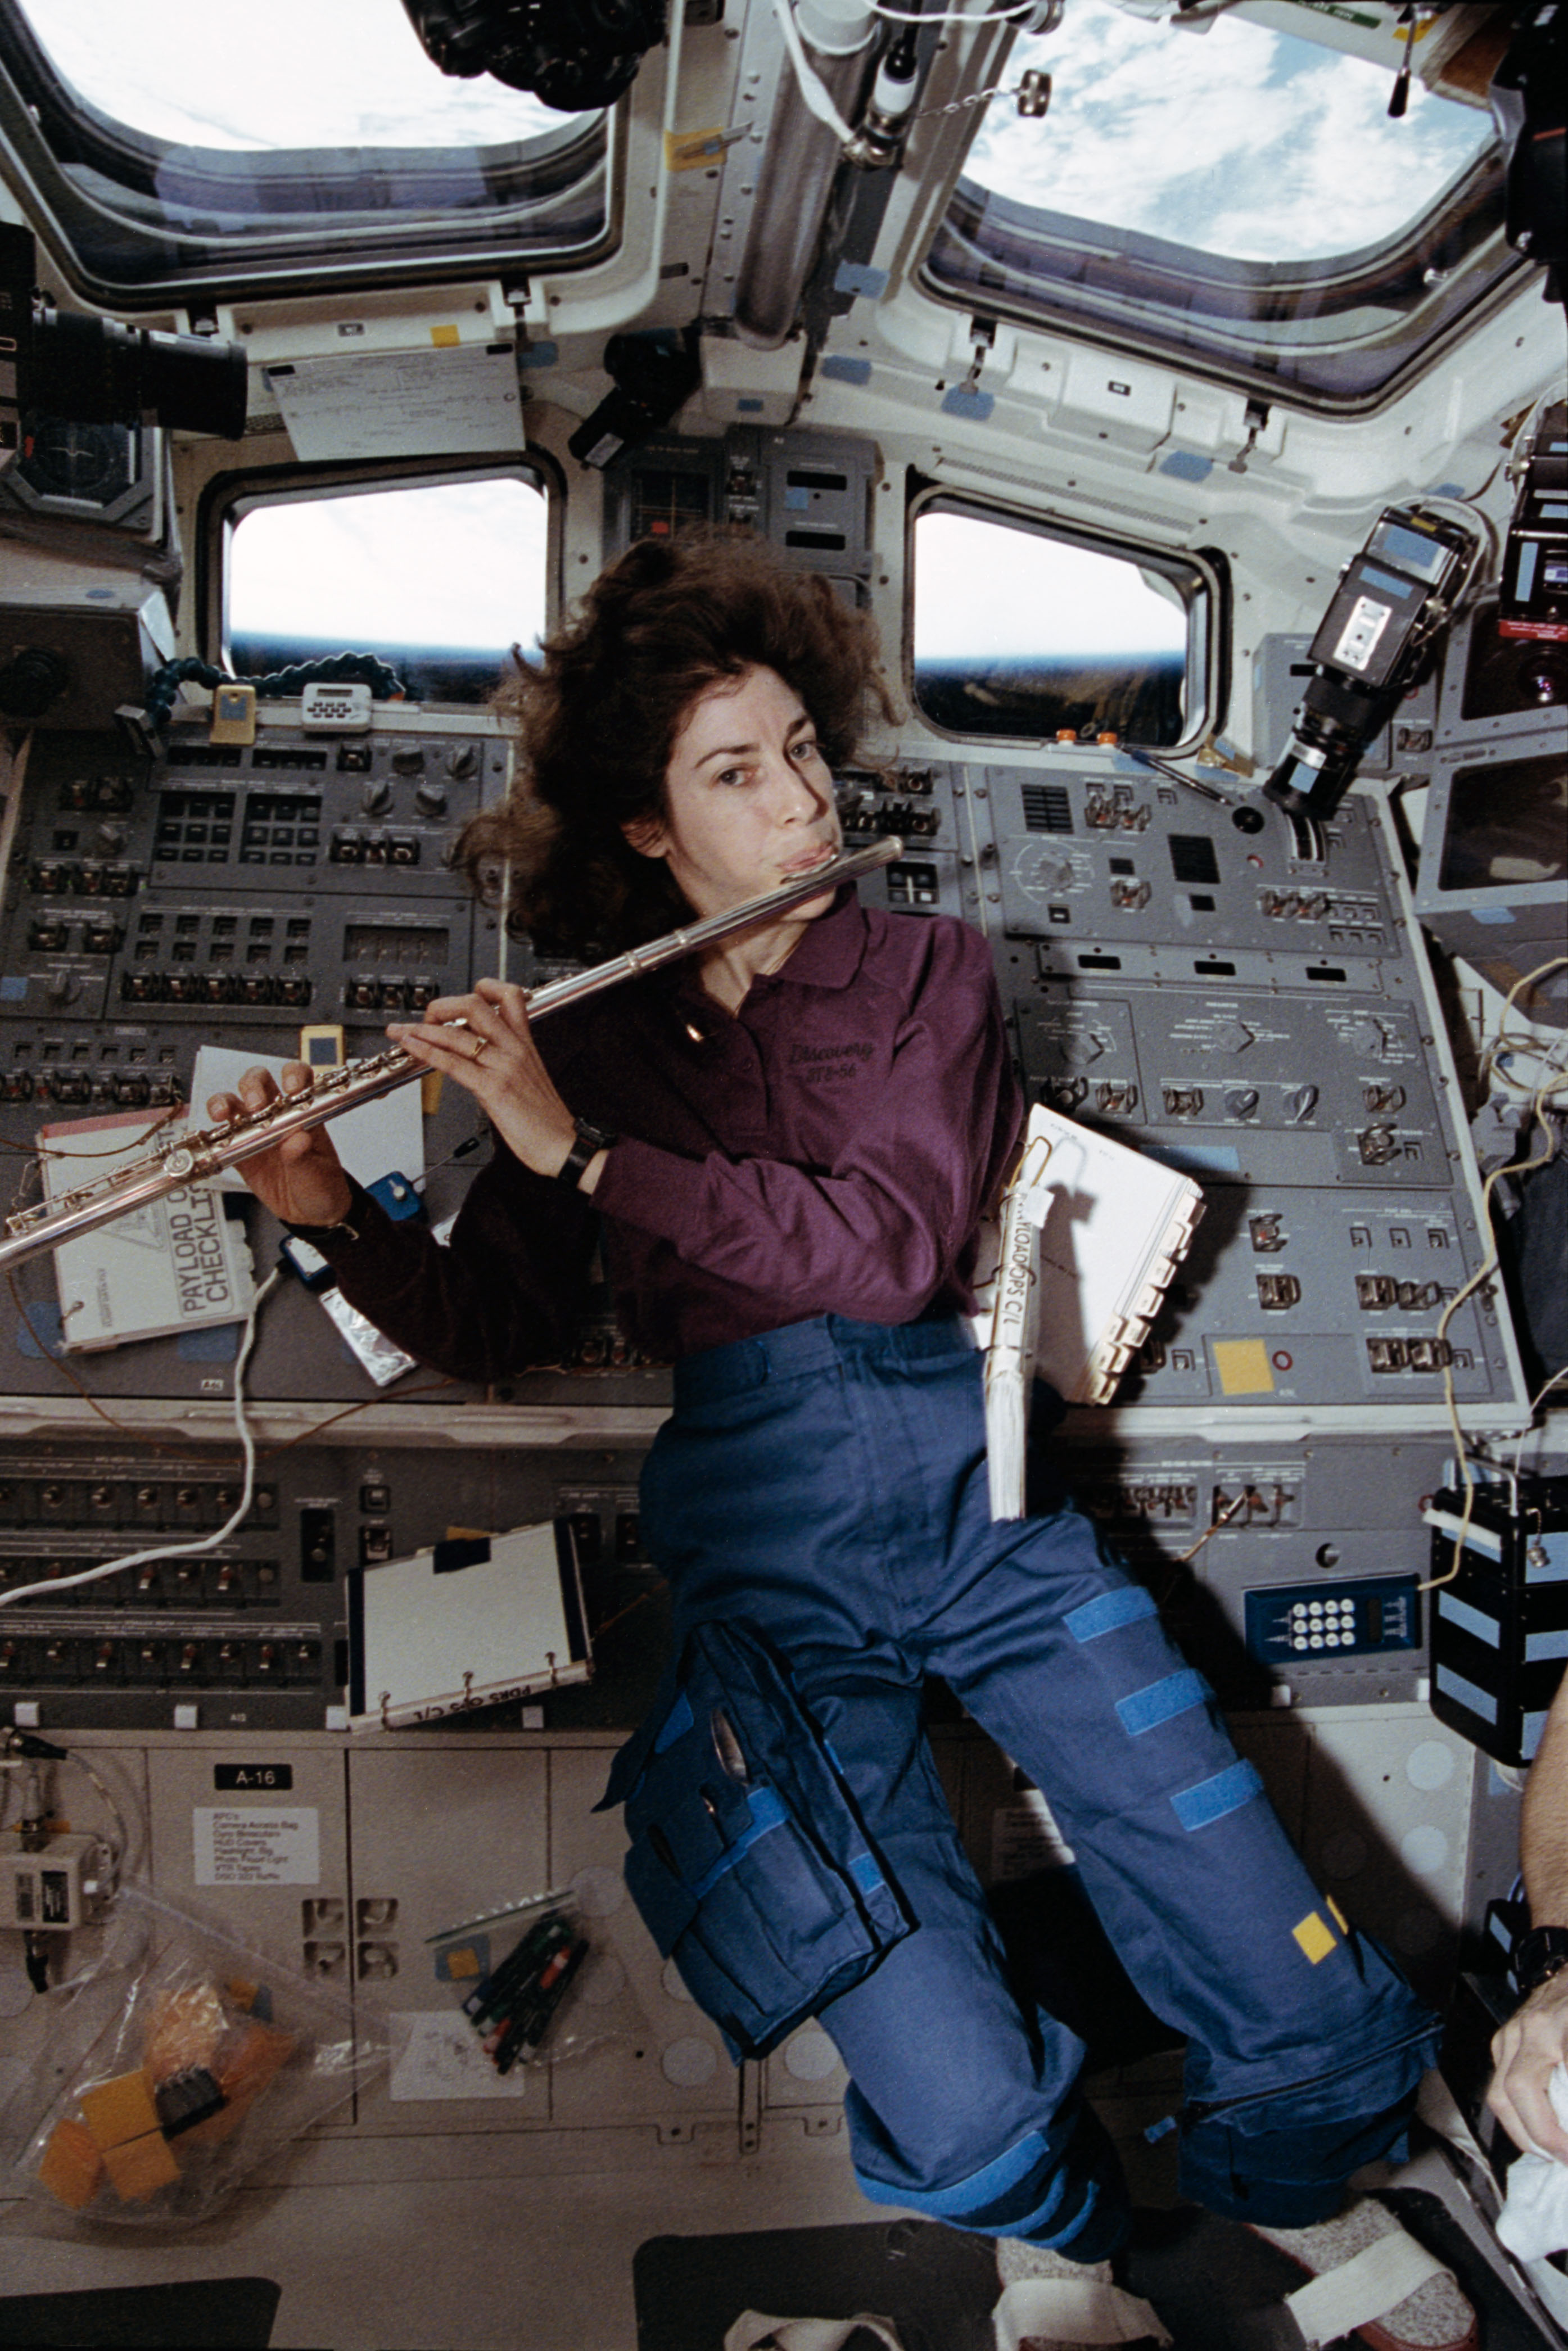 Ochoa plays the flute on Discovery’s flight deck